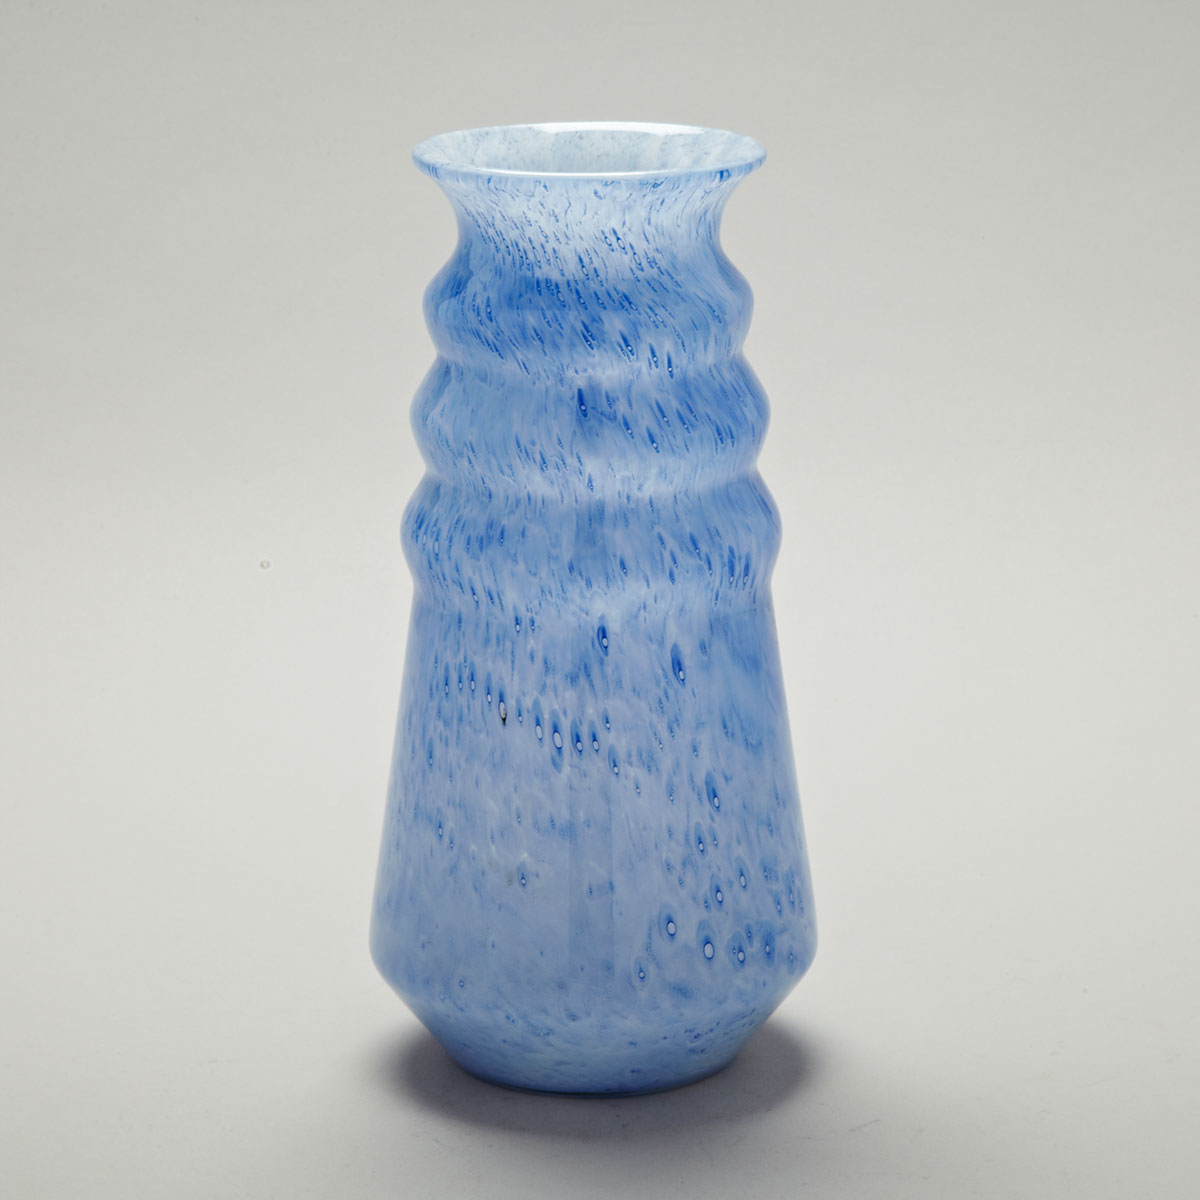 Kimble Durand Mottled Pale Blue Glass Vase, c.1931-32